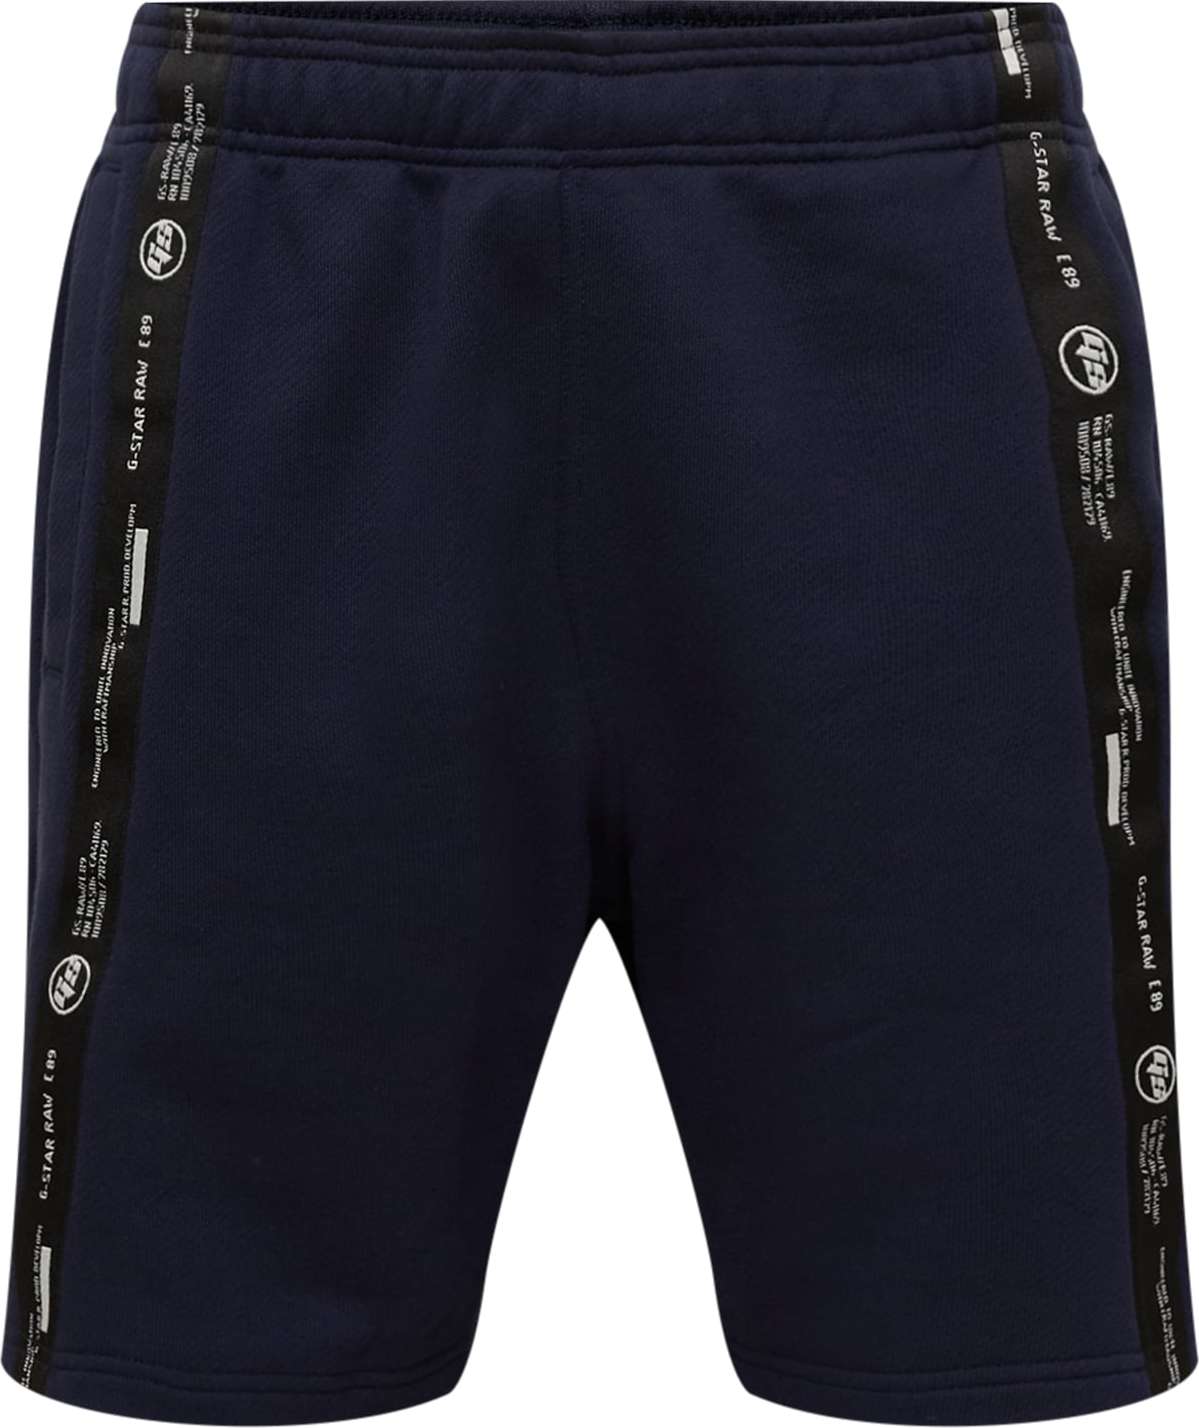 G-Star RAW Kalhoty marine modrá / černá / bílá